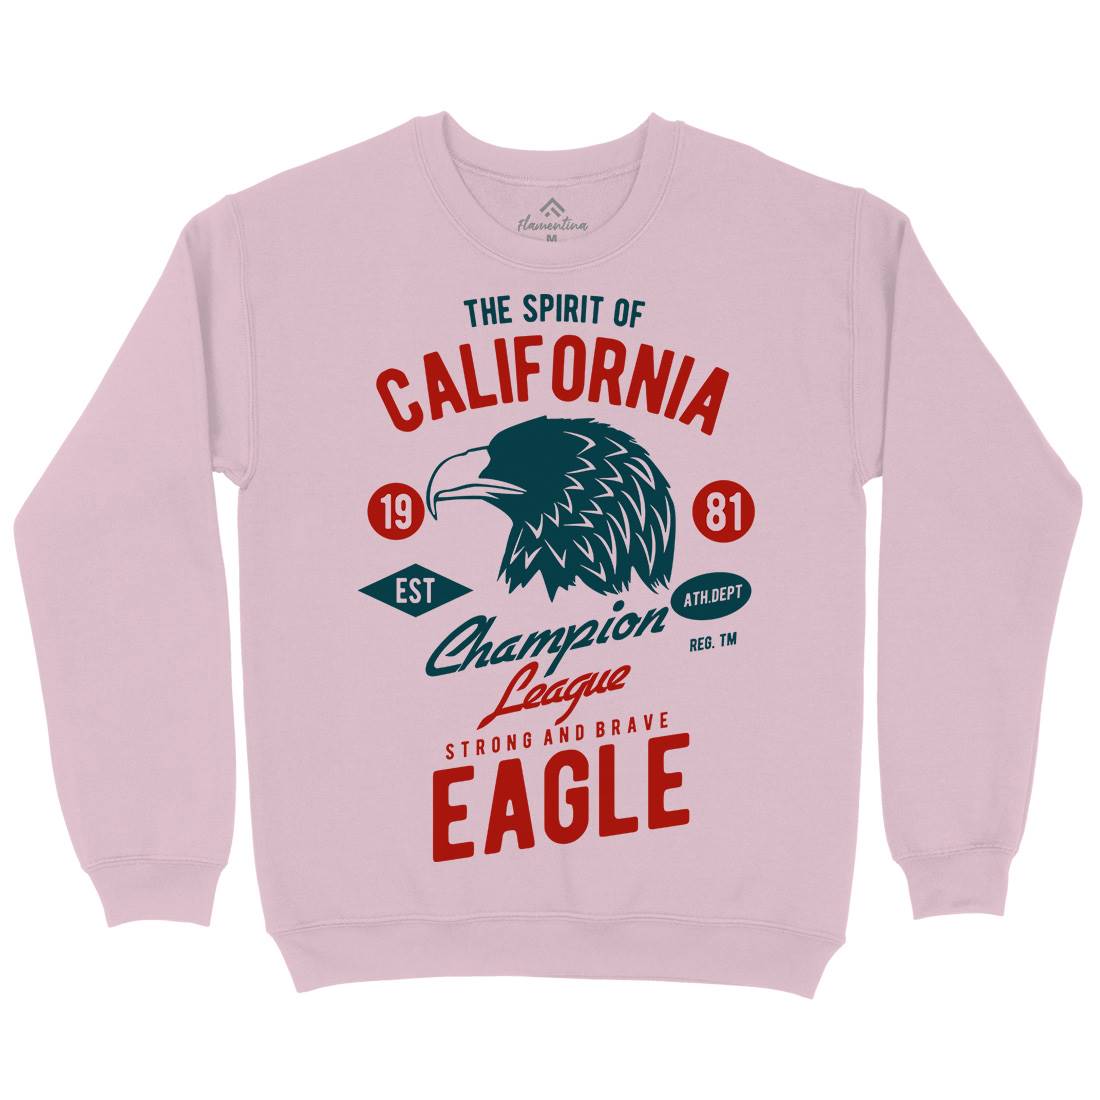 The Spirit Of California Kids Crew Neck Sweatshirt American B467